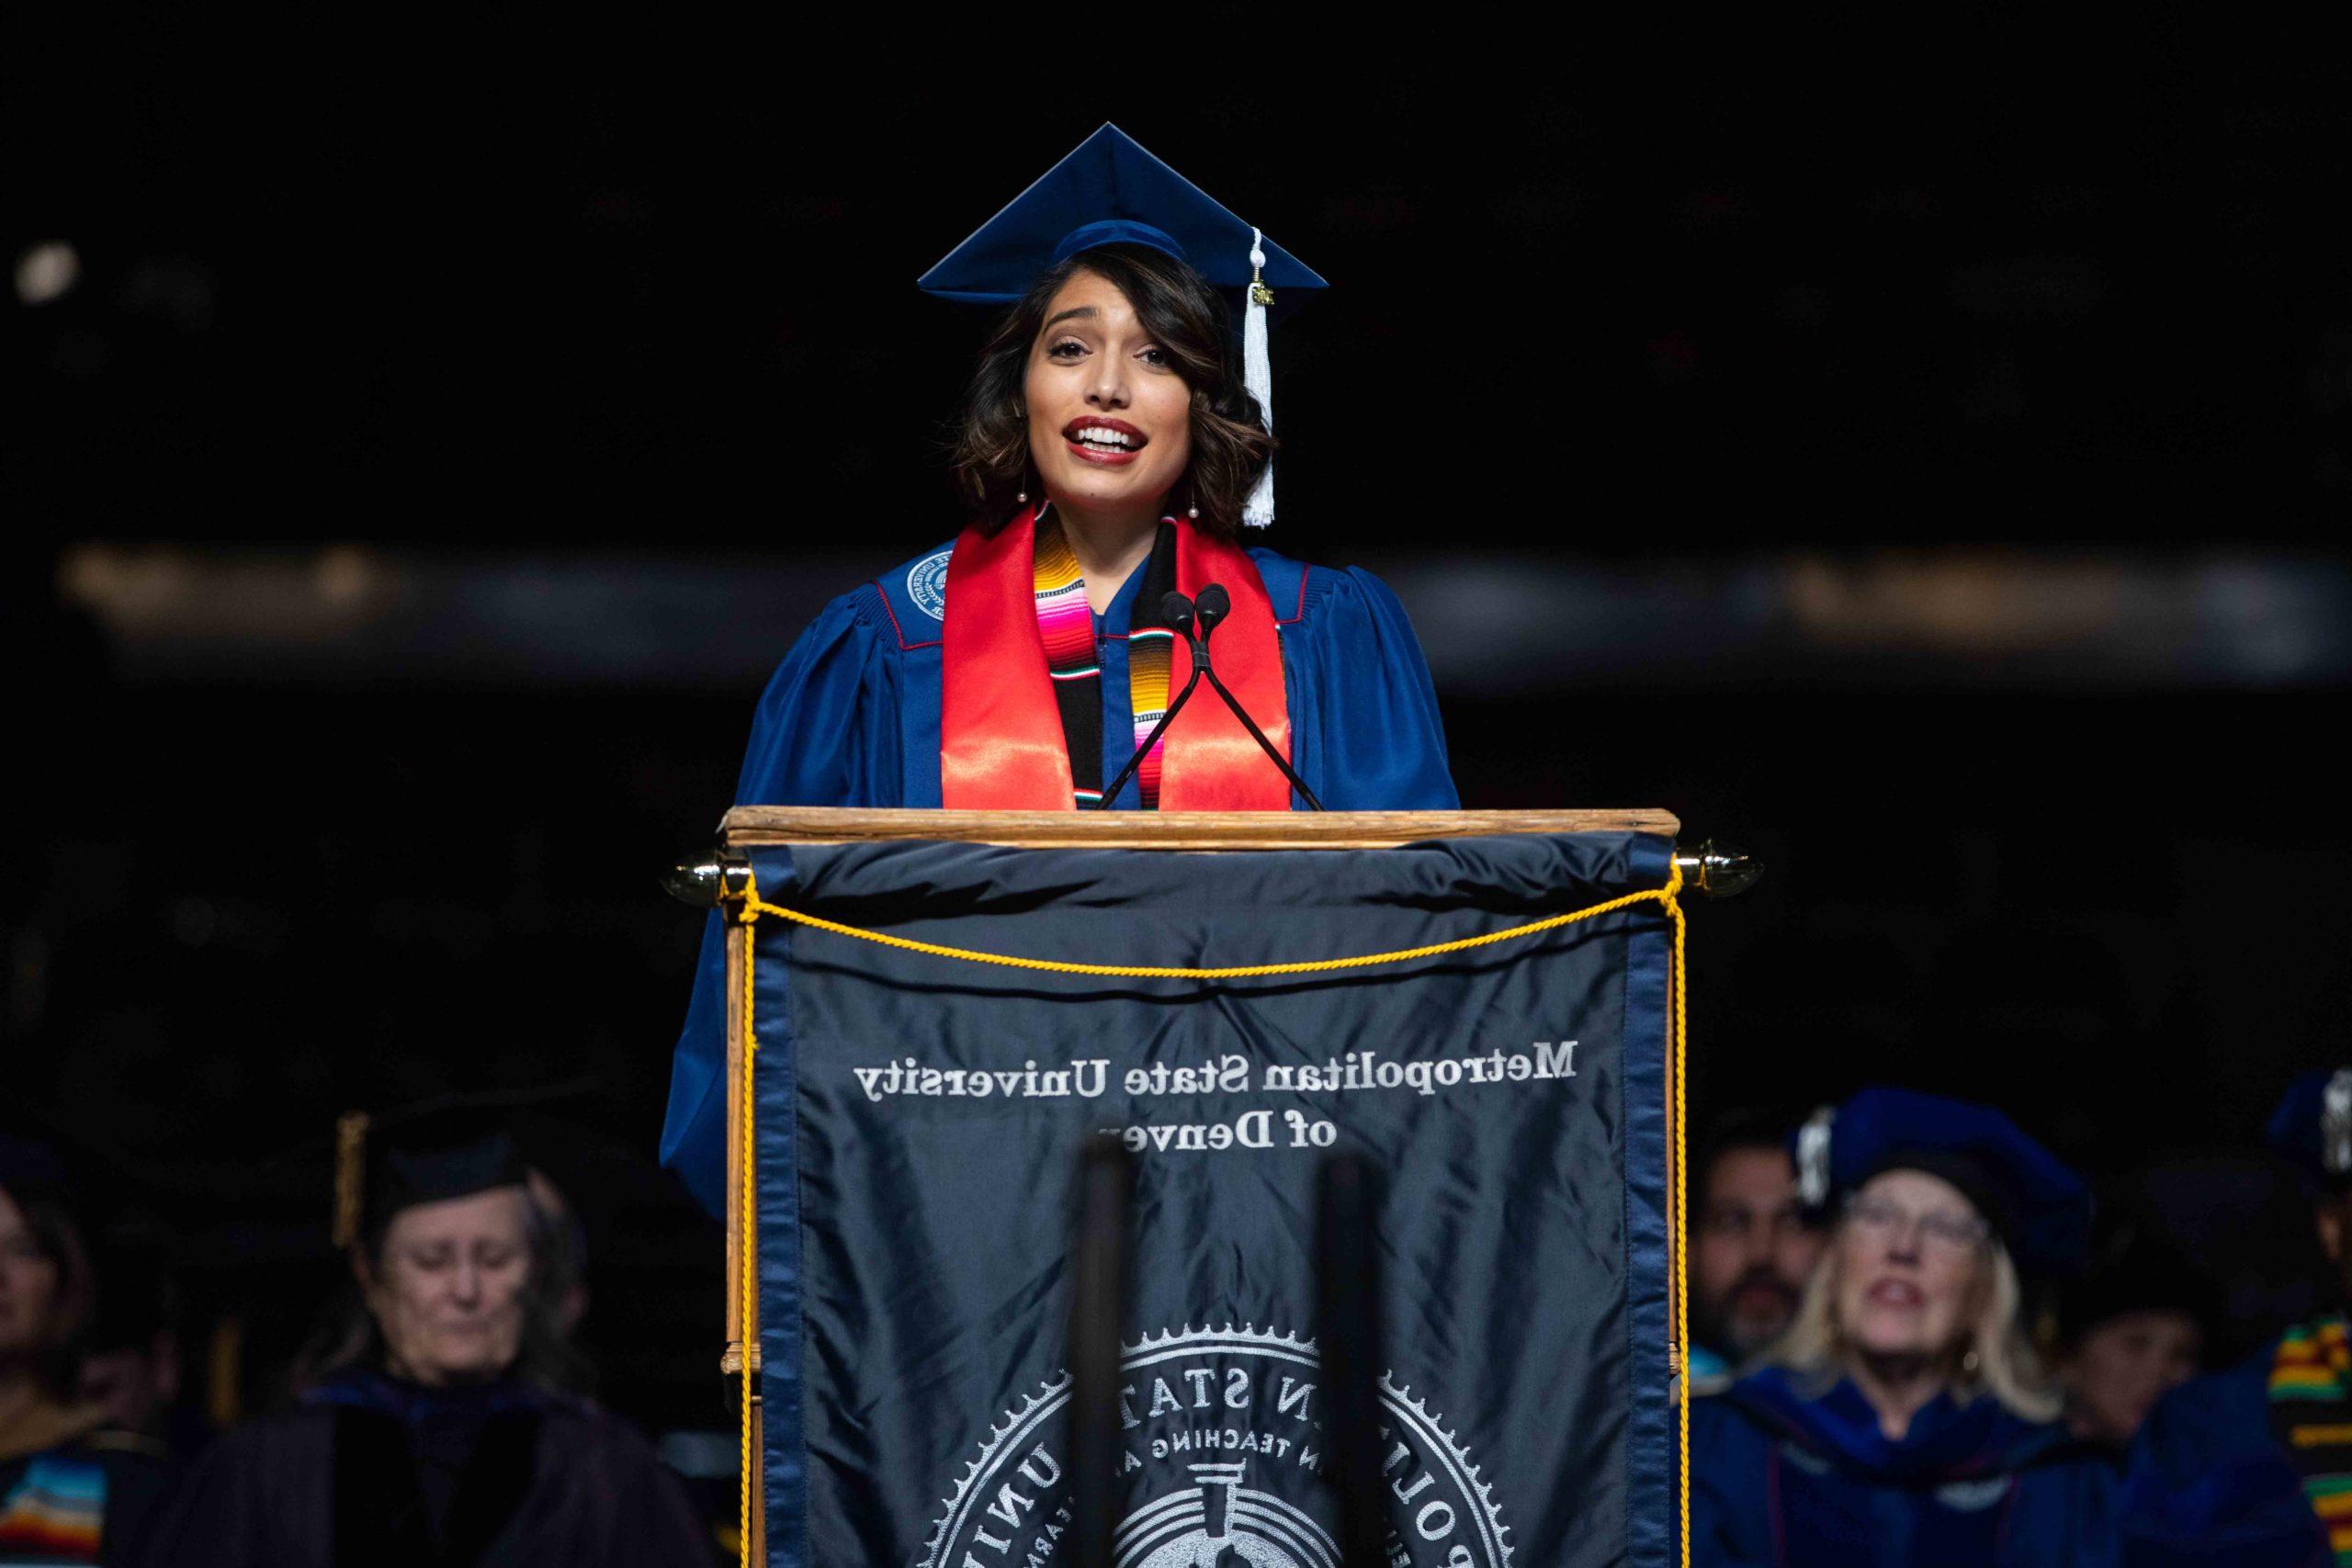 MSU Denver Student Speaker at Fall 2019 Commencement Ceremony